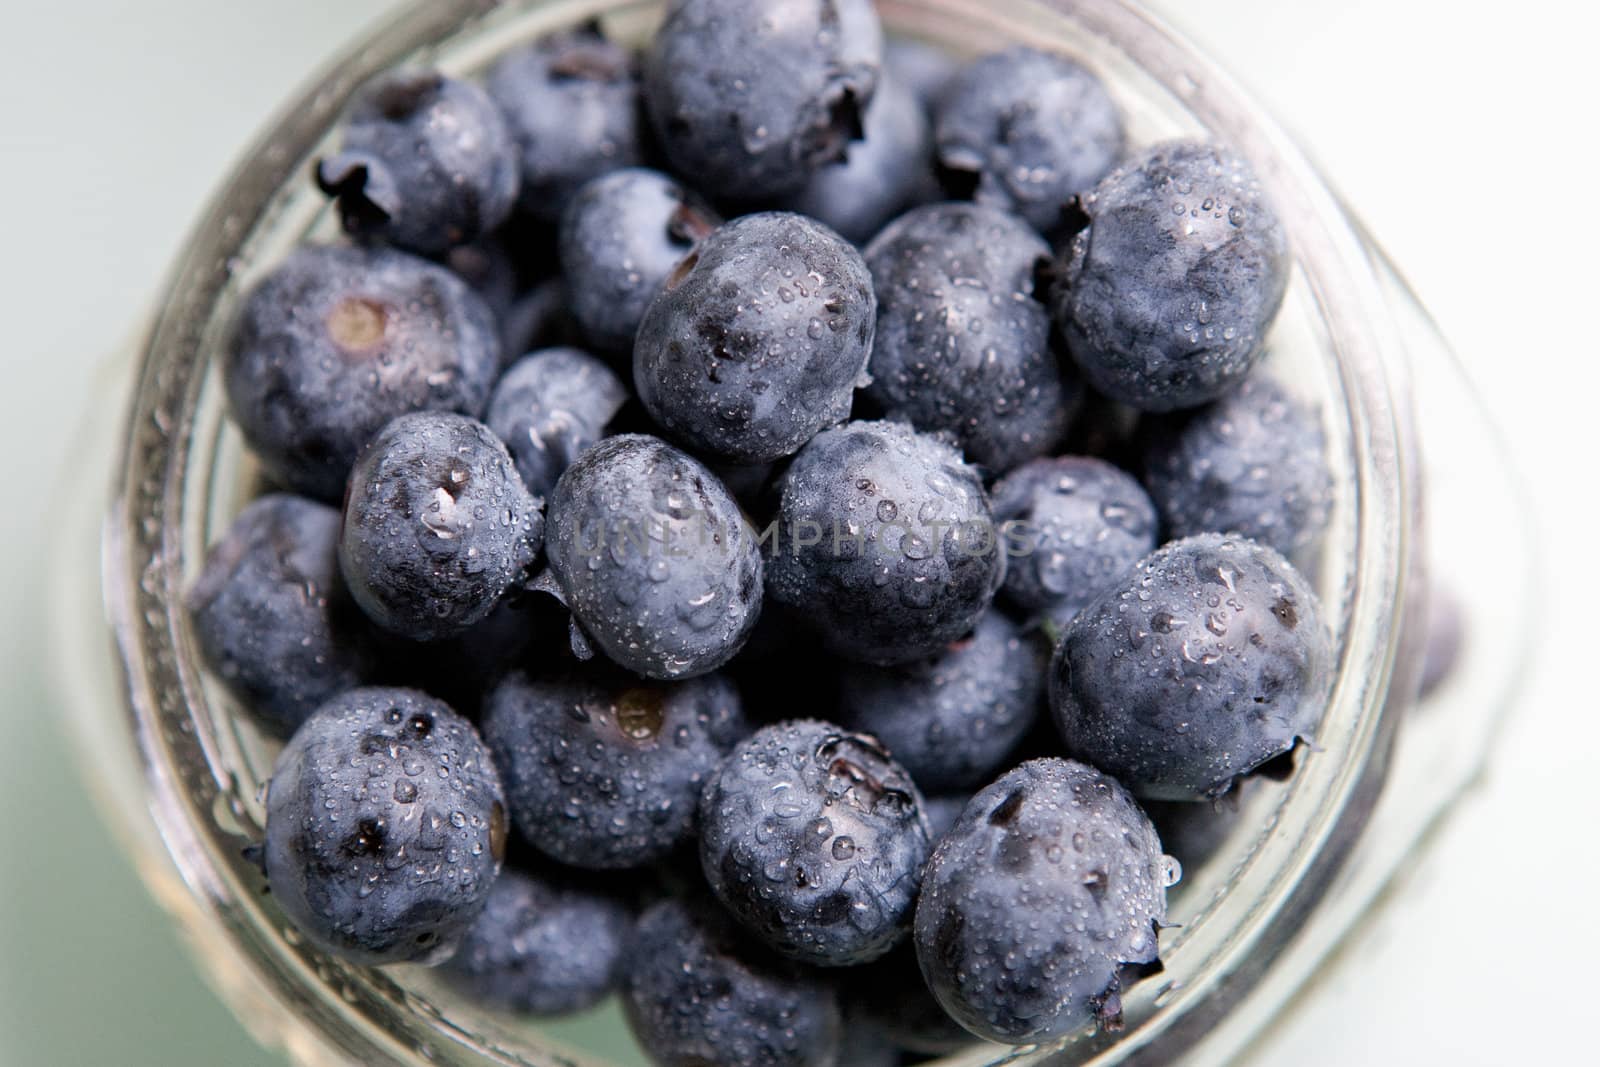 Fresh Blueberries in a Jar by svenler